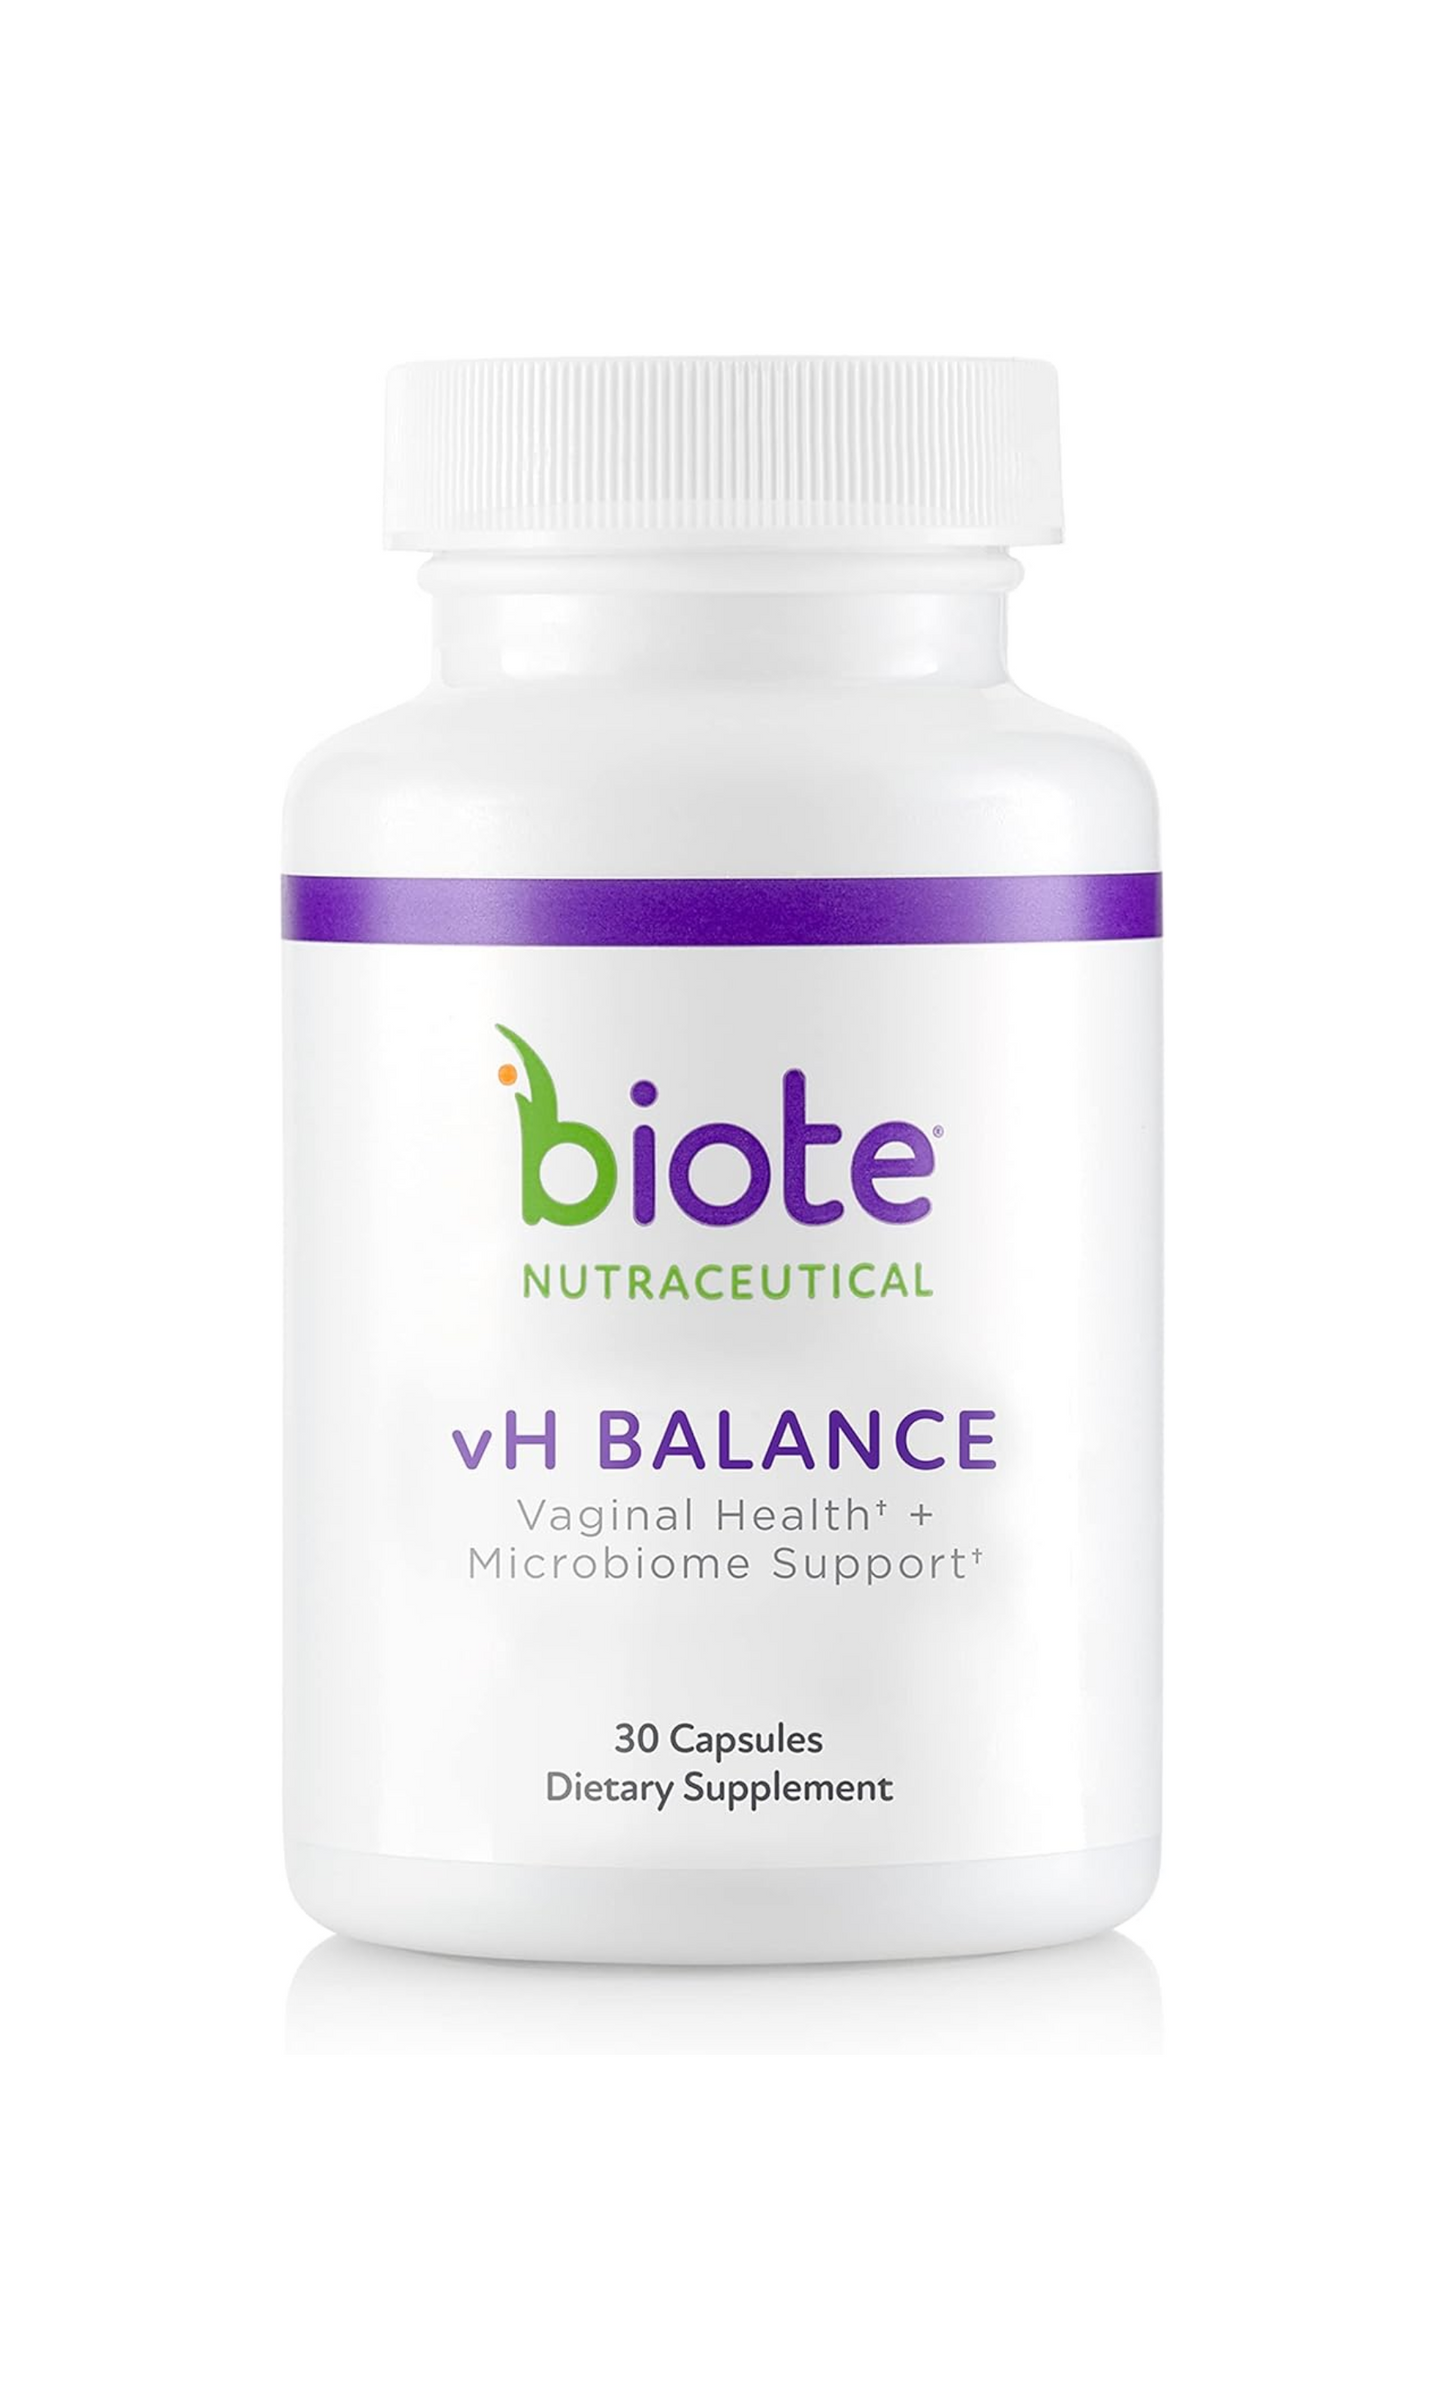 Biote vH Balance